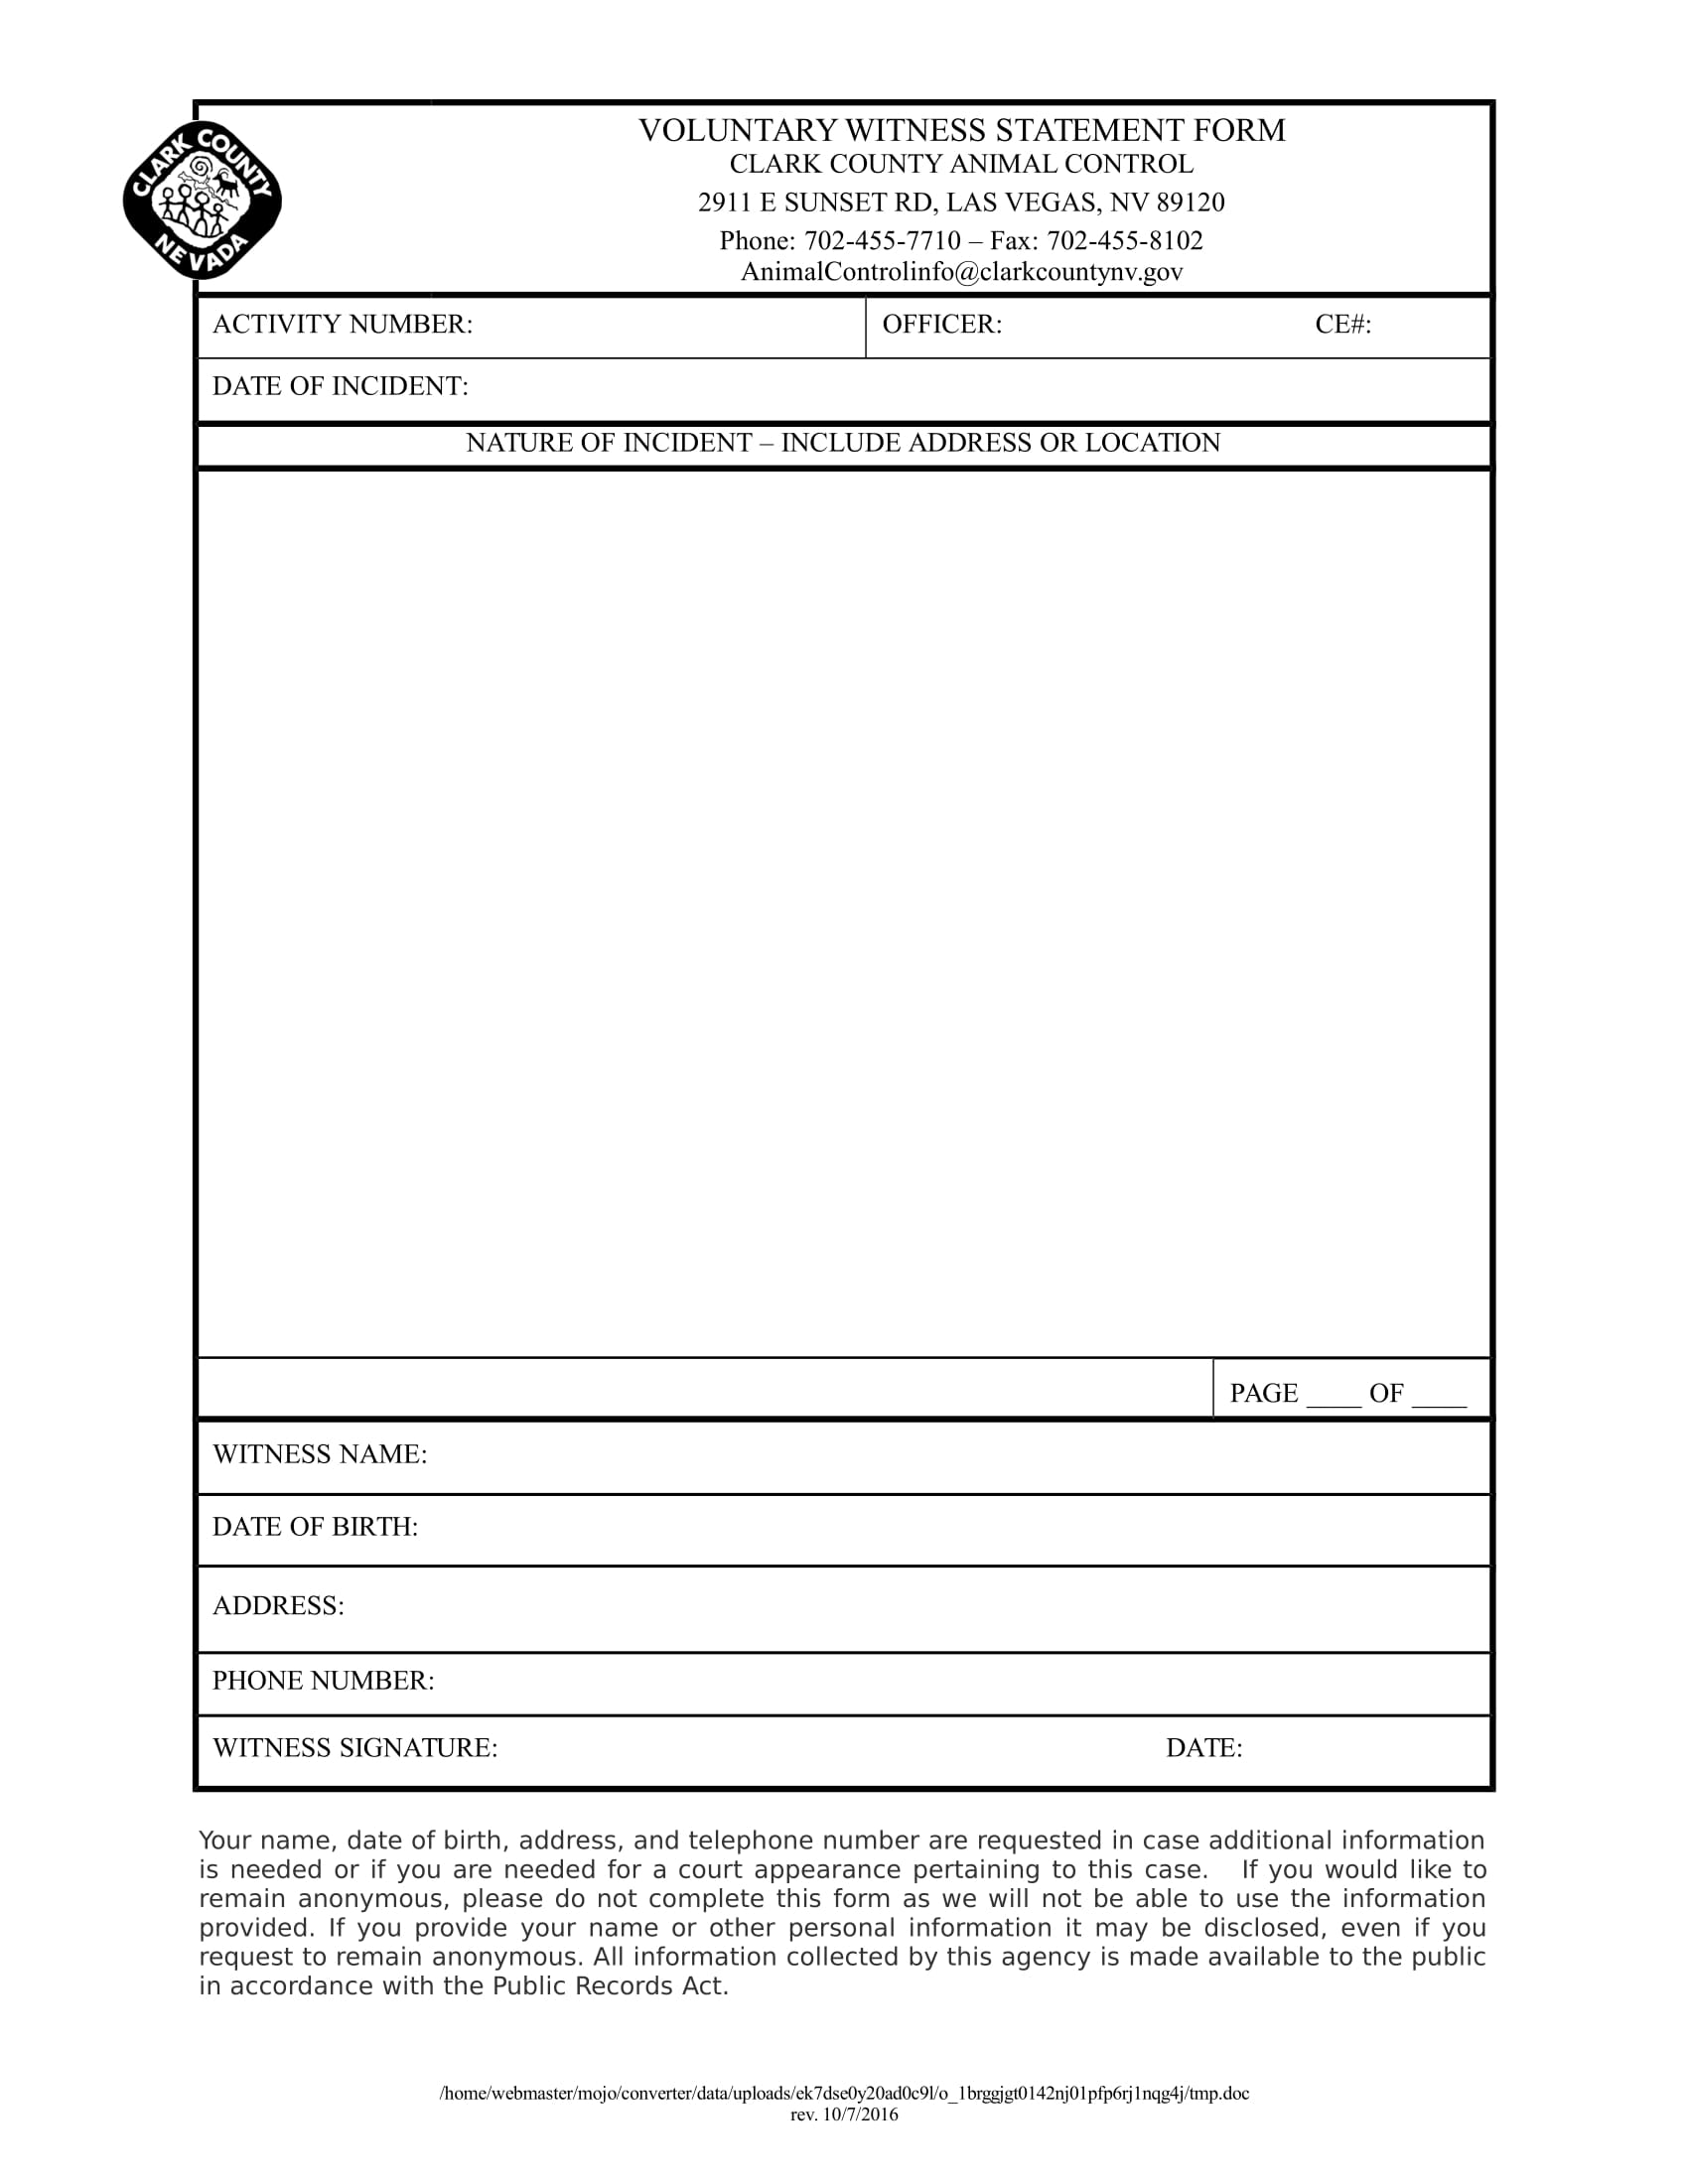 voluntary witness statement form 1